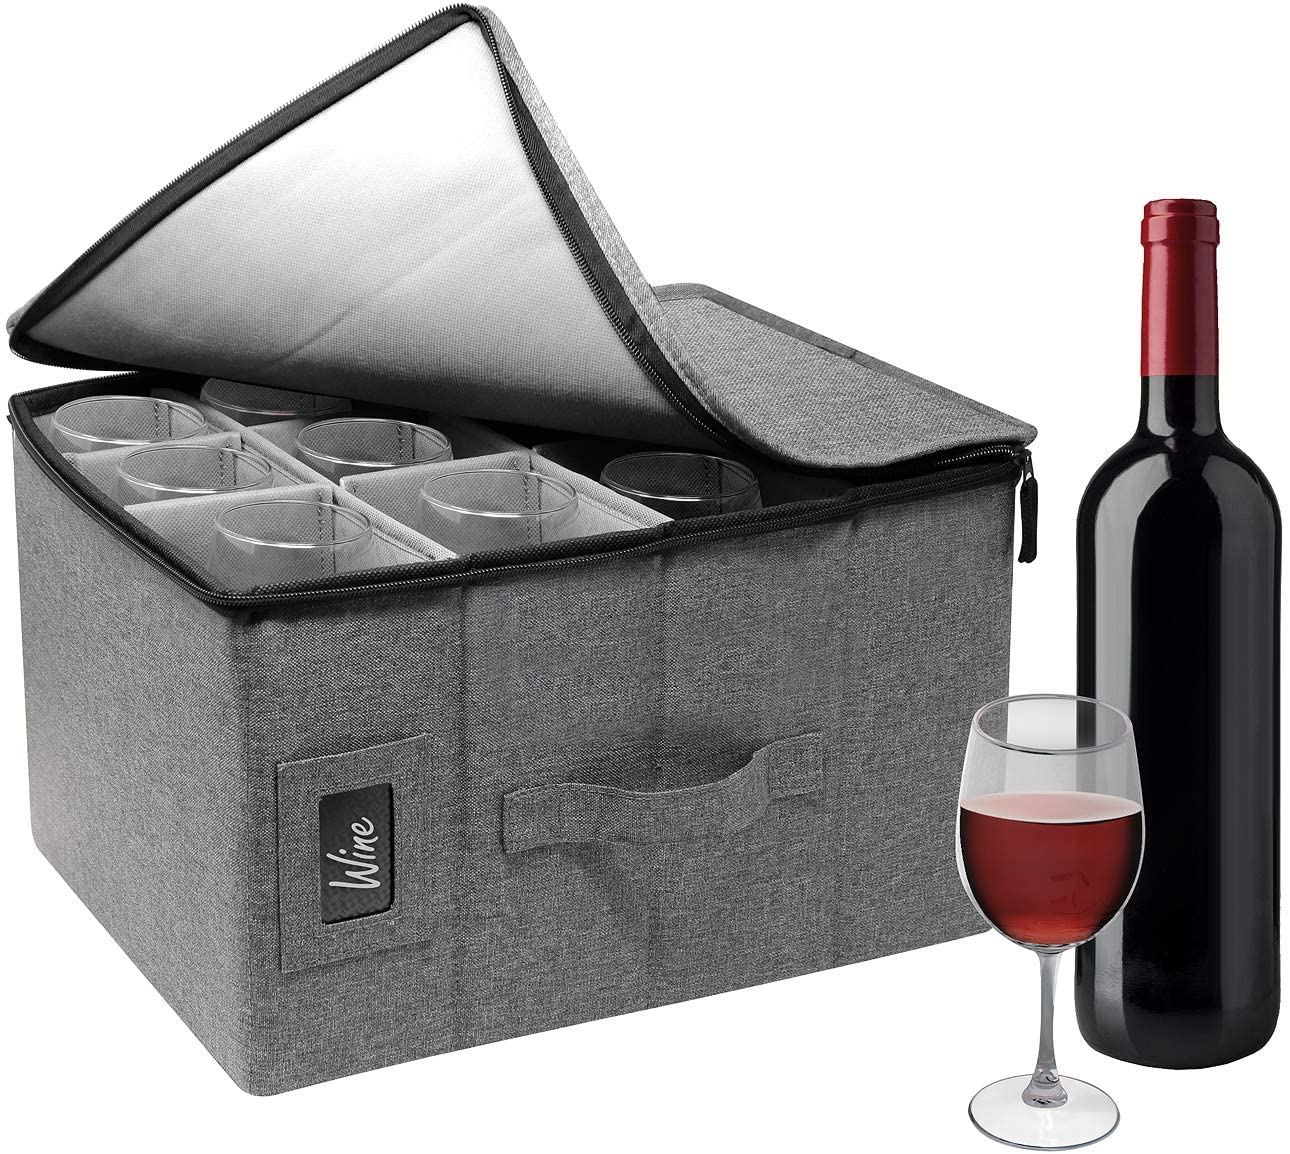 Sorbus Stemware Wine Glasses Storage Box - Gray - image 1 of 7